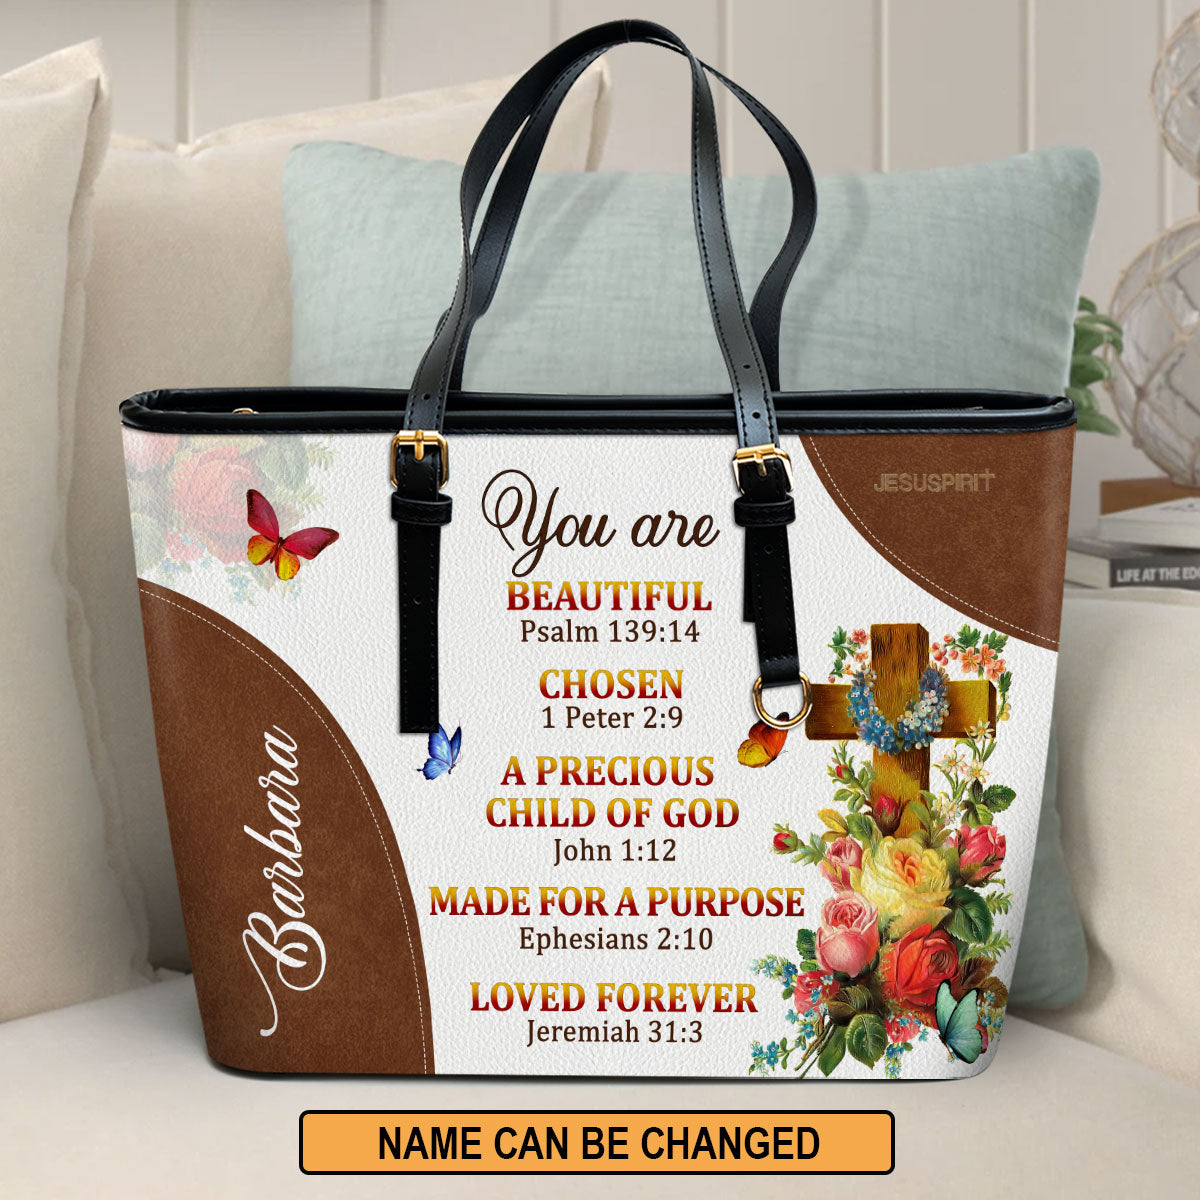 Customised Canvas Tote Bag Initials Name Designs